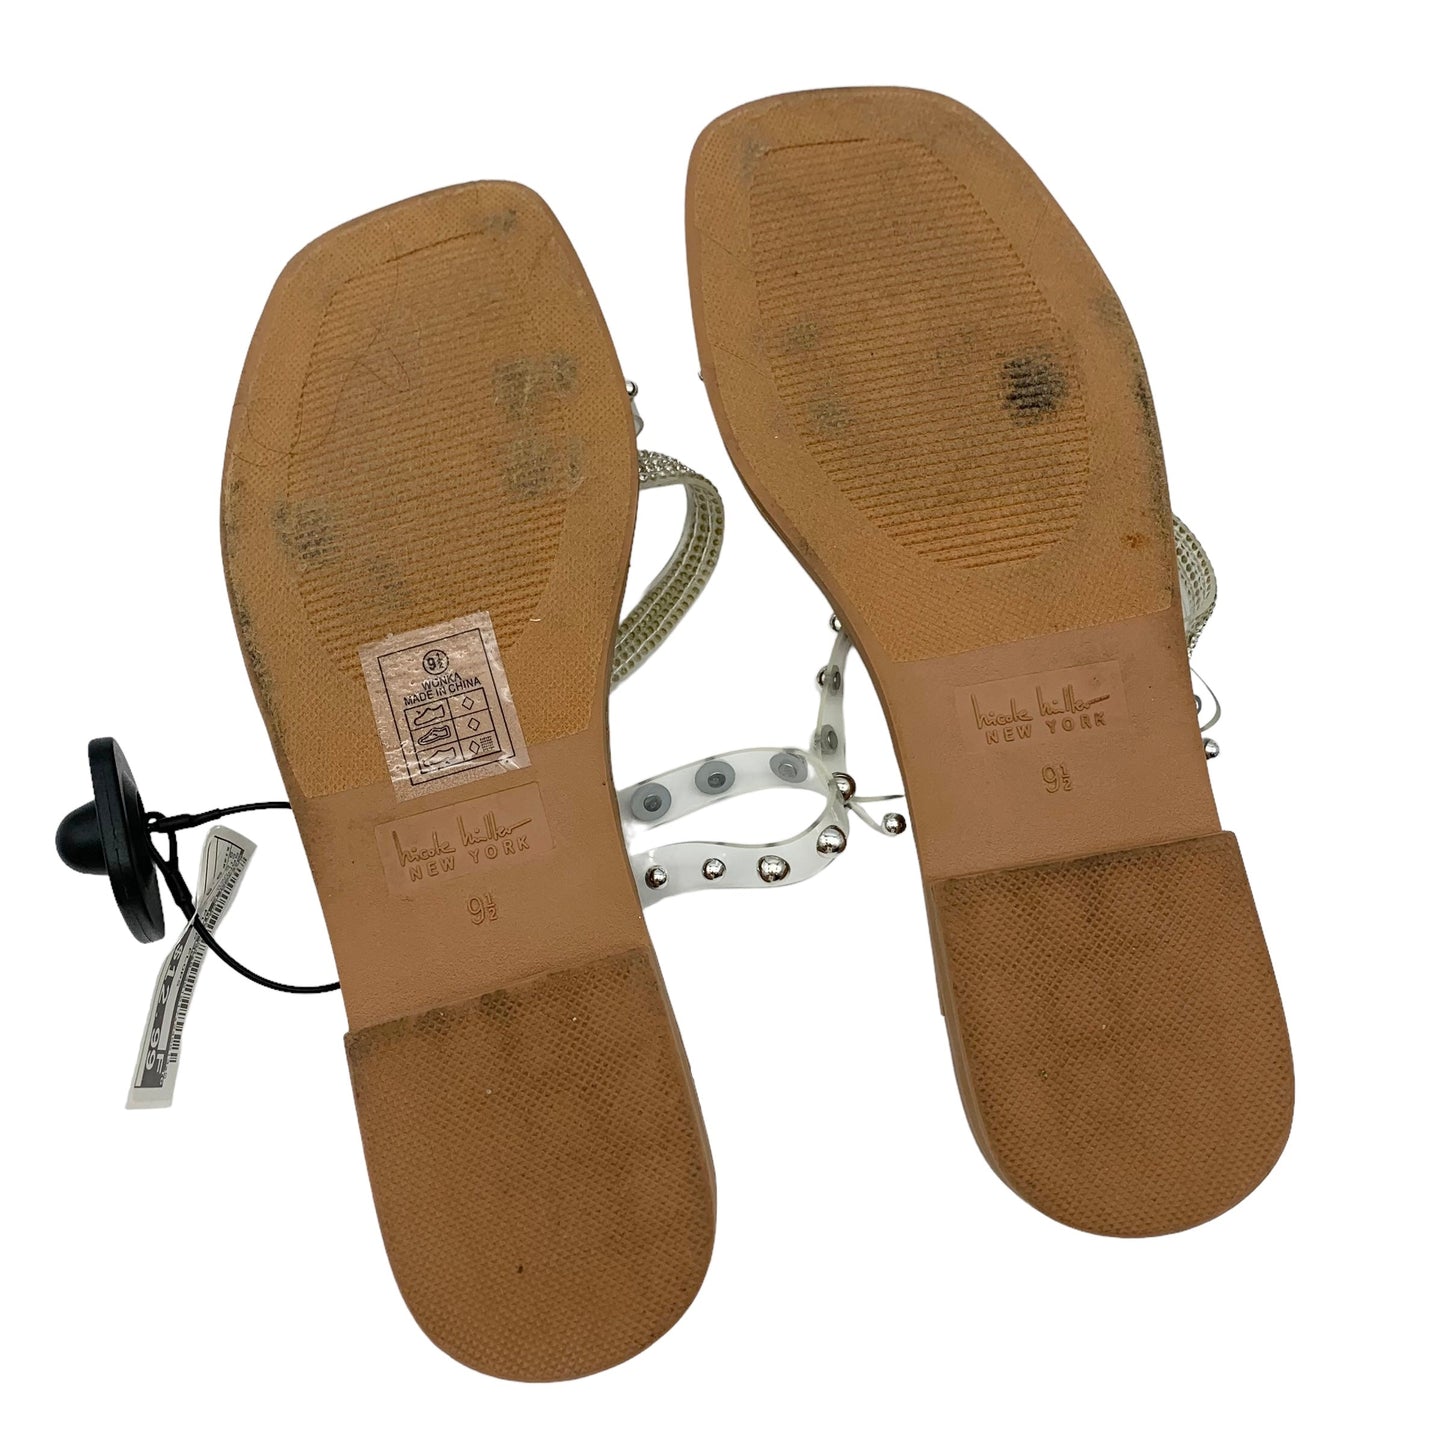 Silver Sandals Flip Flops Nicole Miller, Size 9.5